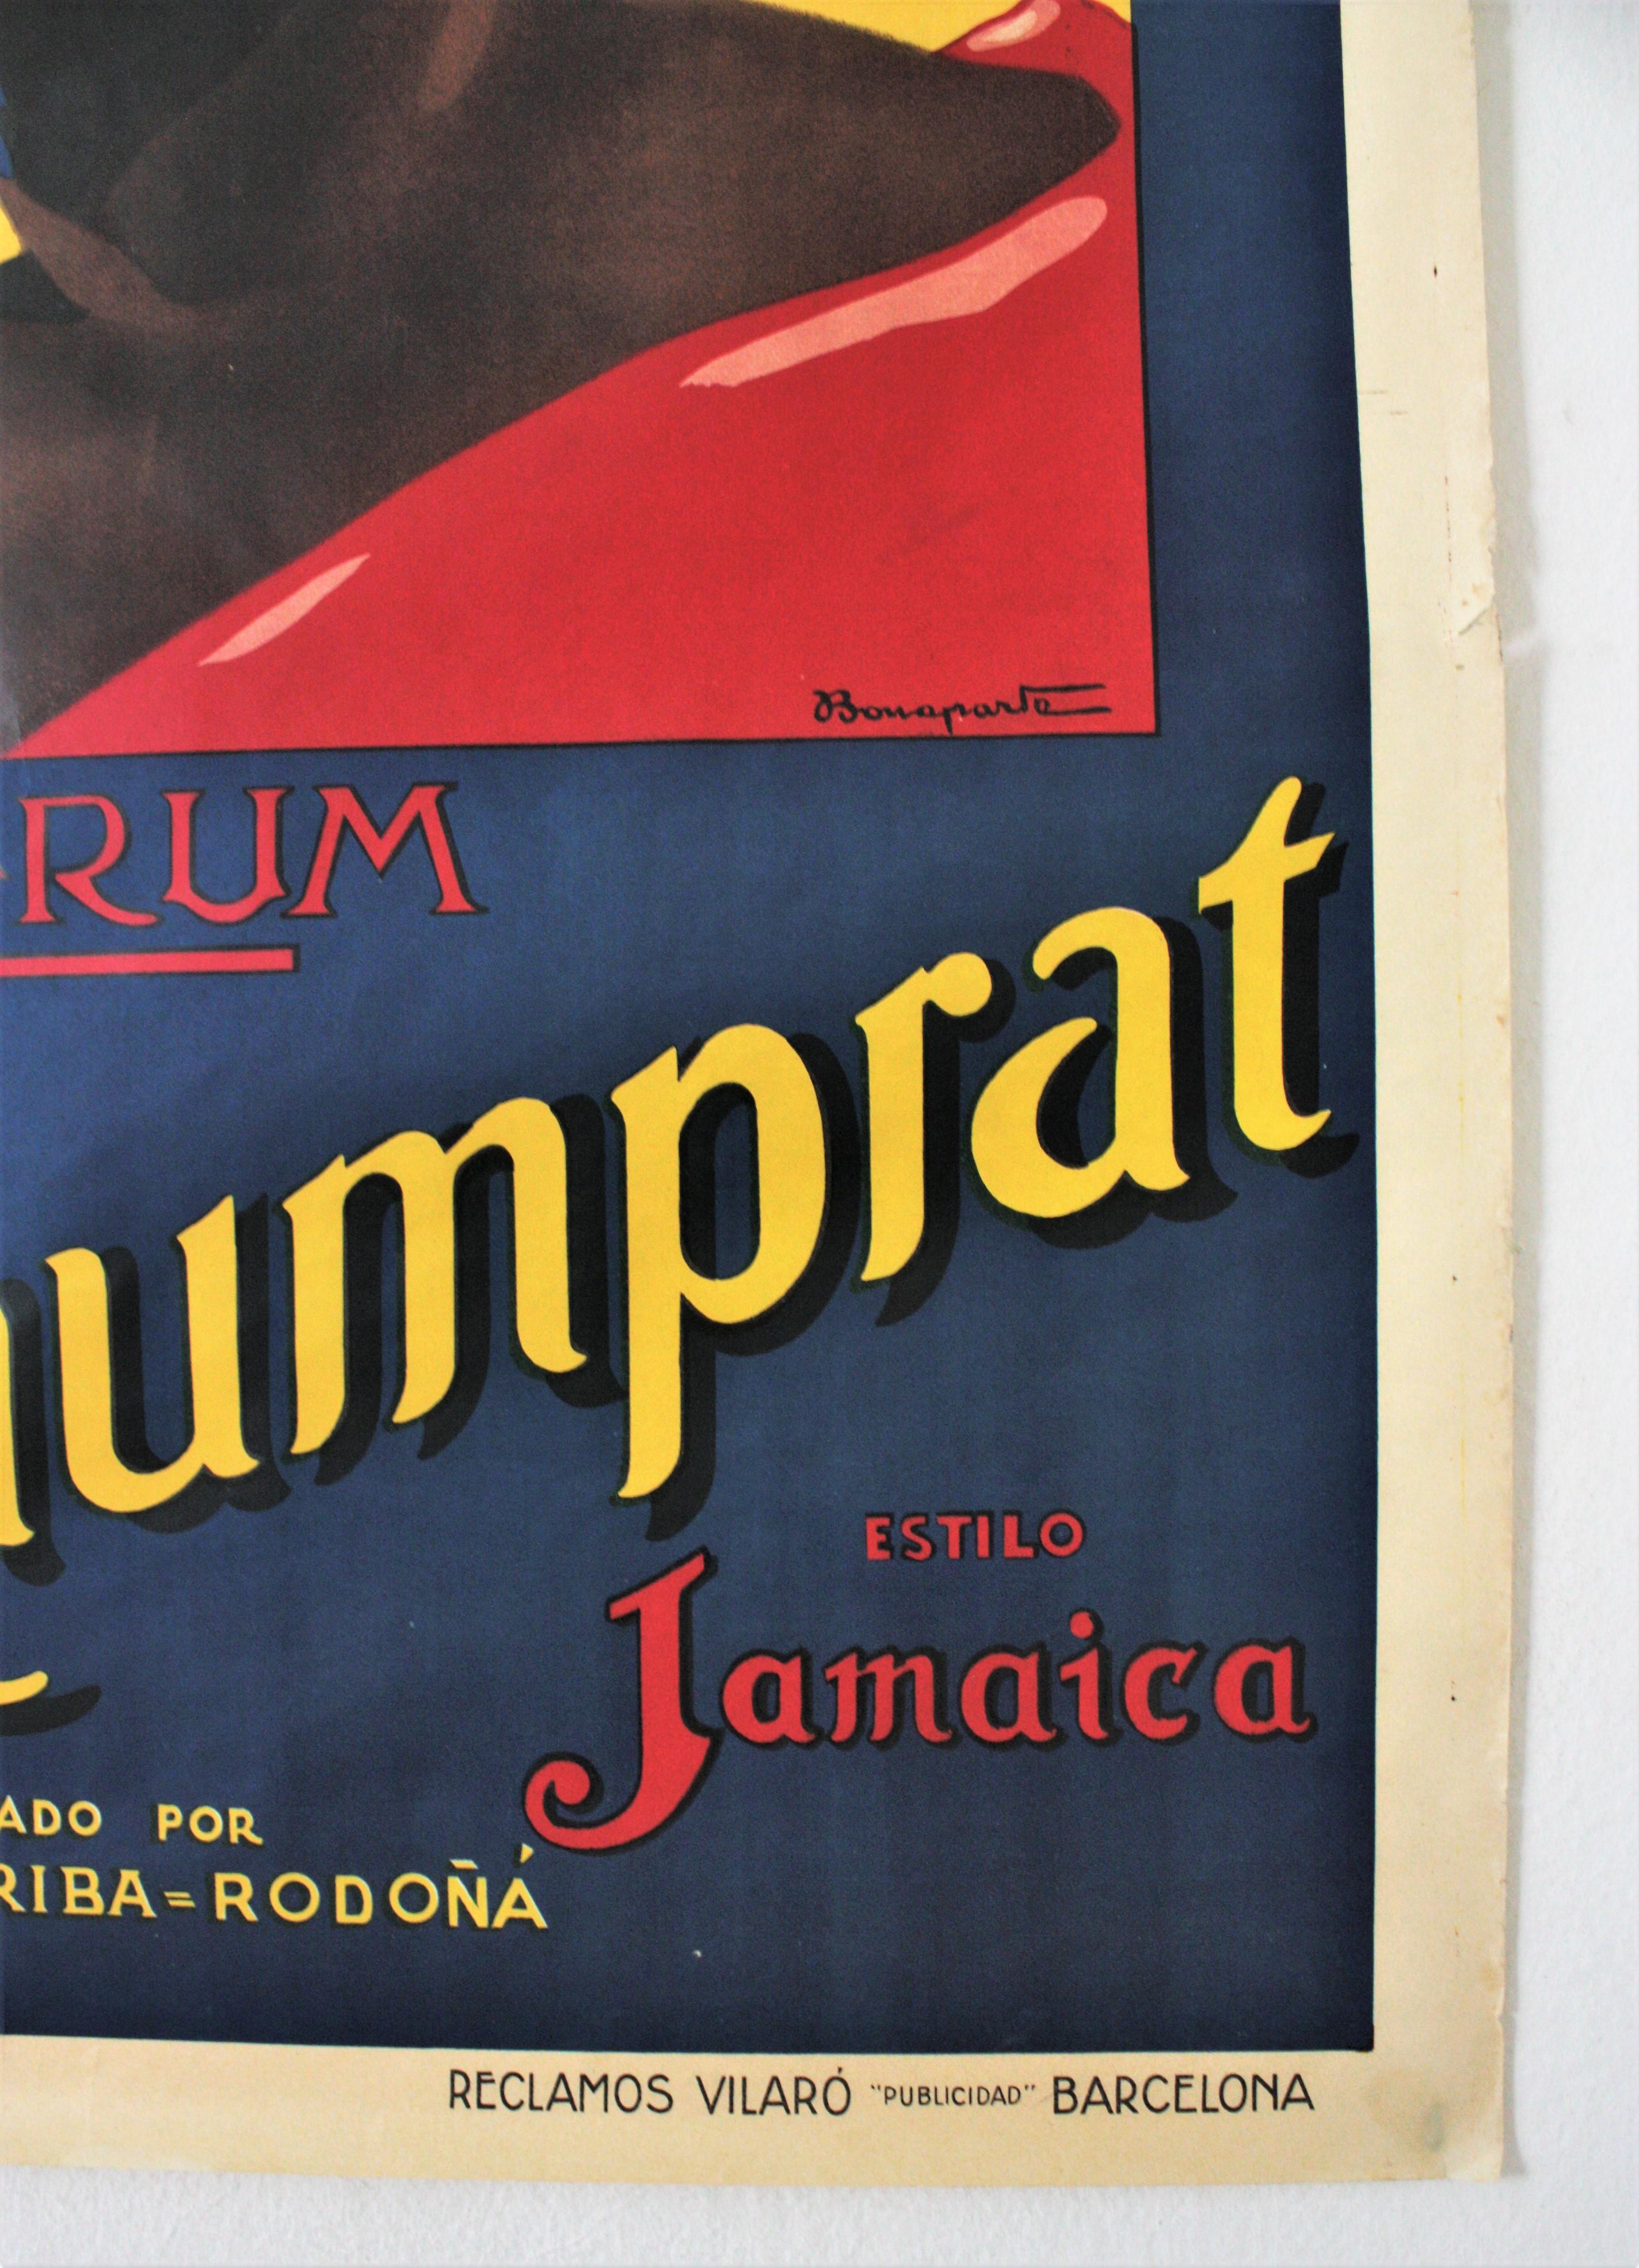 20th Century Original Vintage Rum Rhumprat Old Jack Advertising Poster, 1920s For Sale